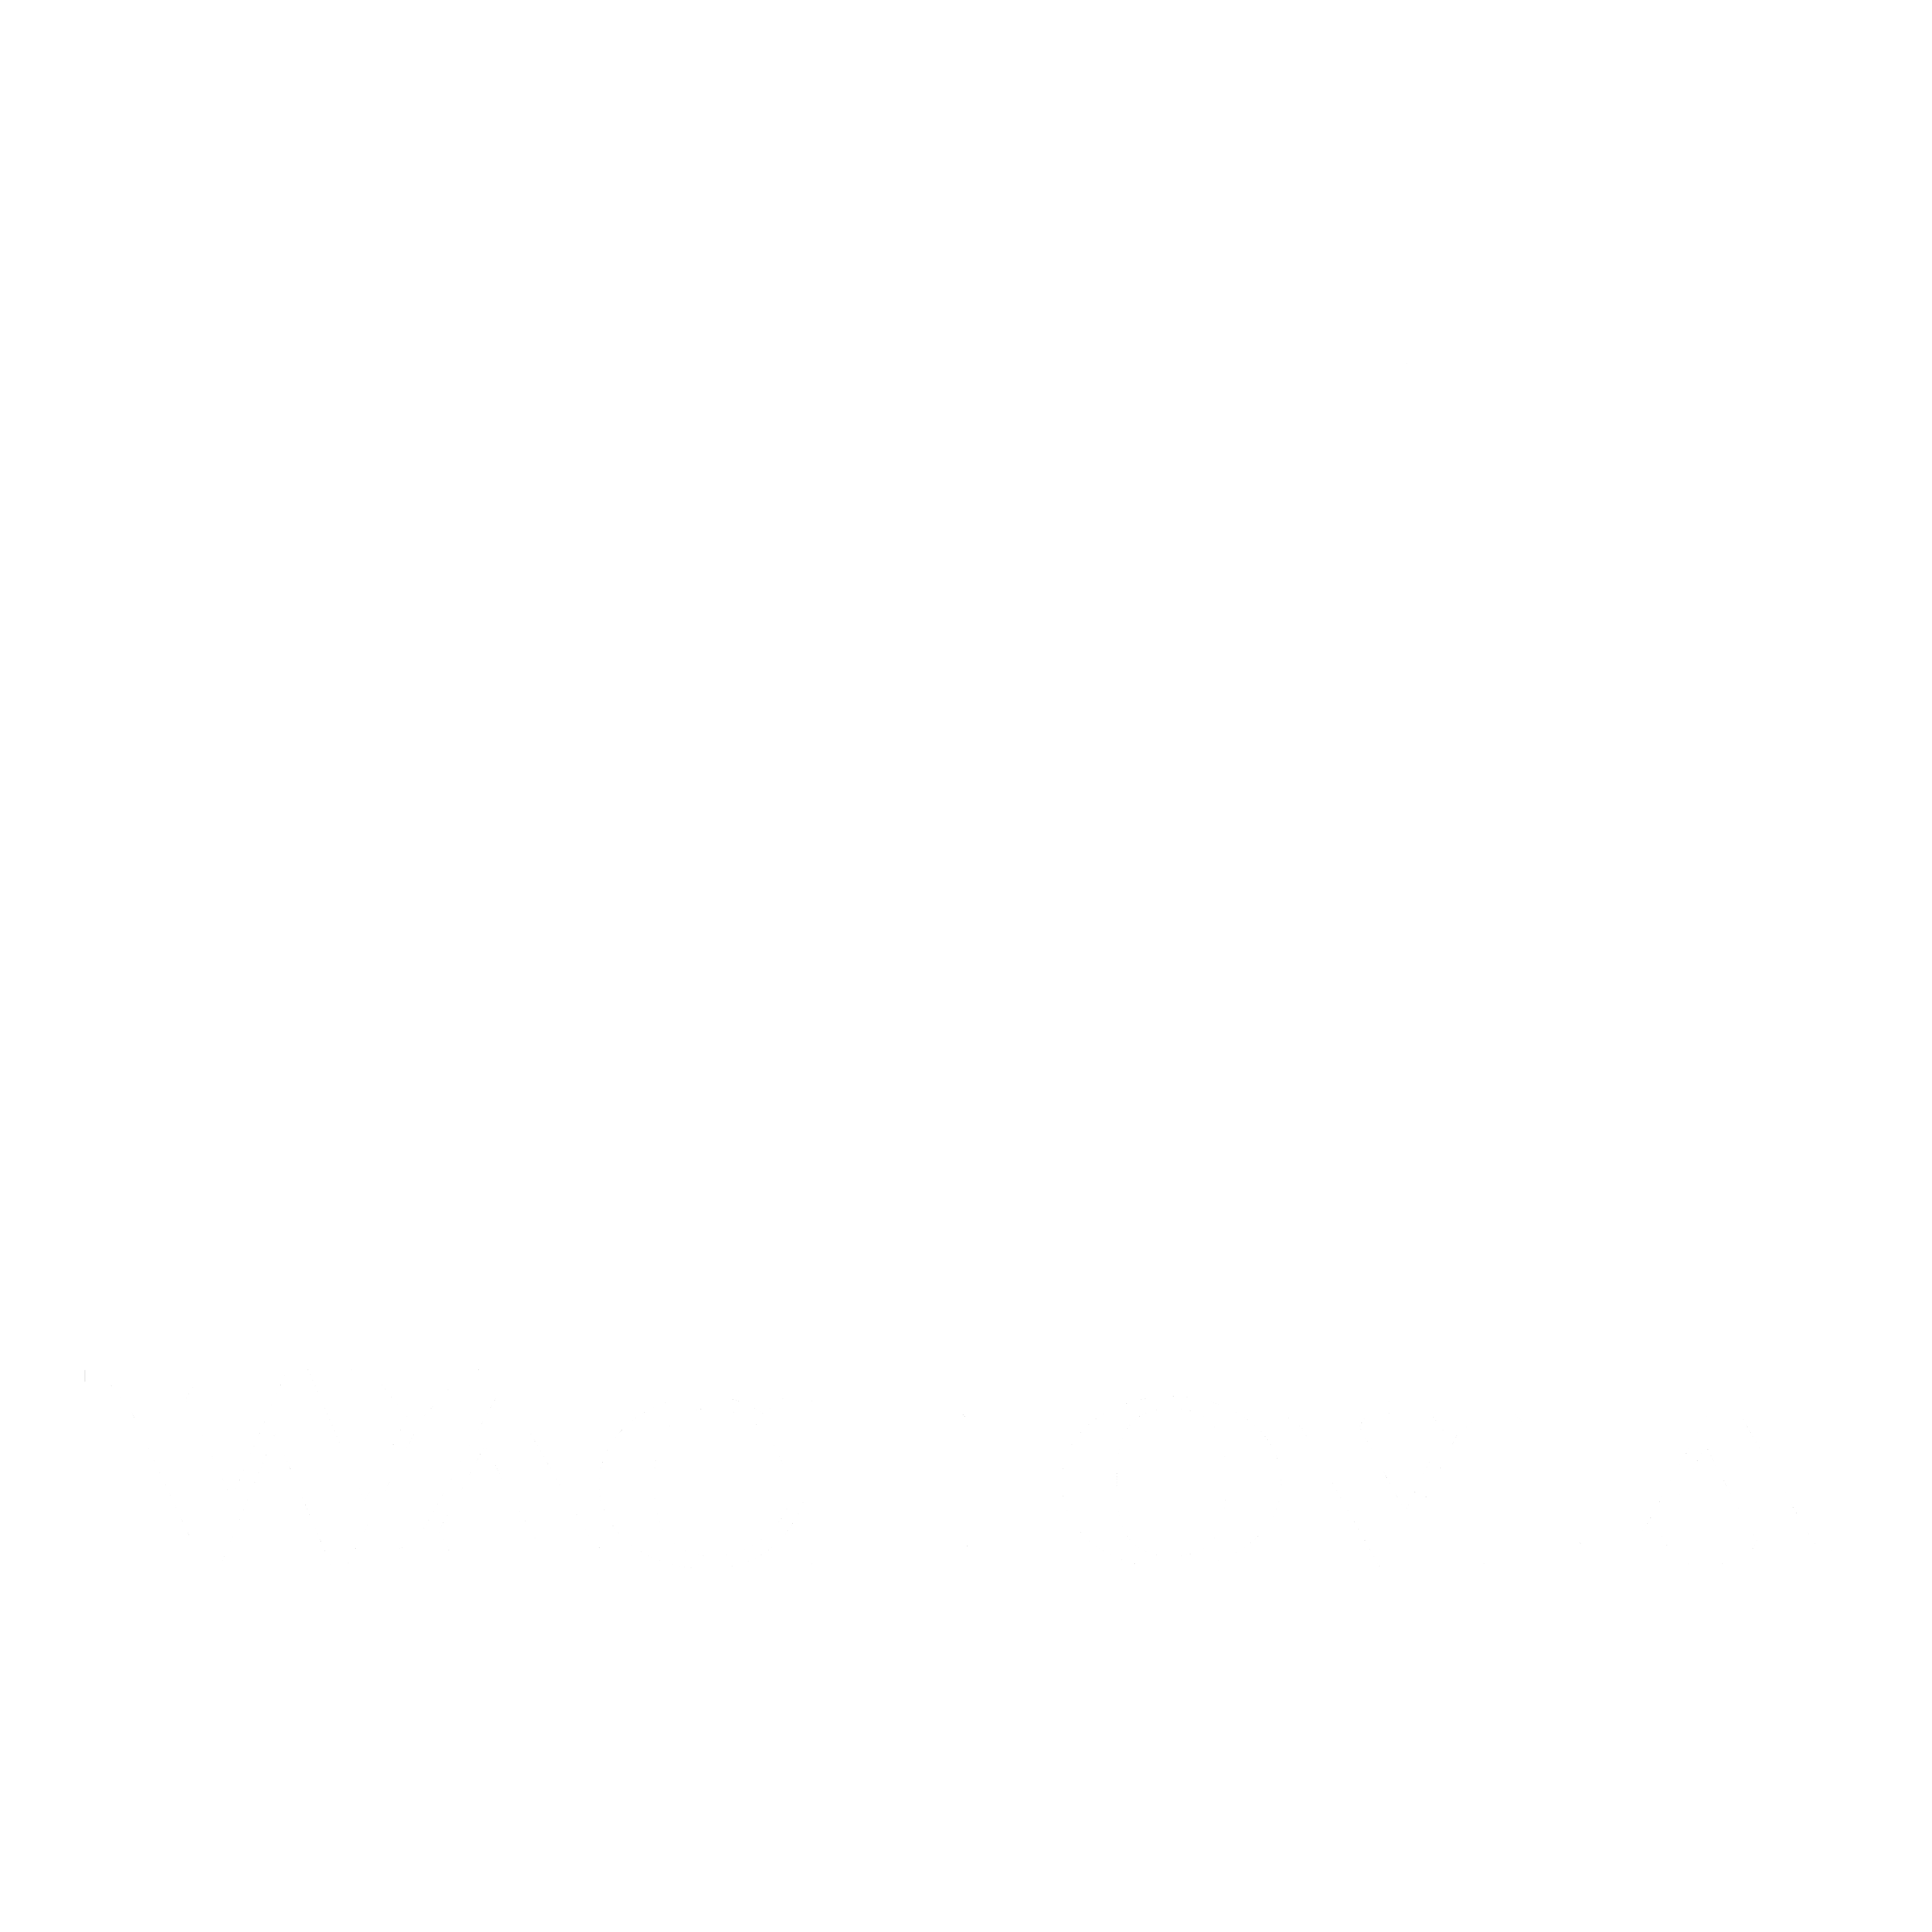 Wachovia Logo - Wachovia Logo PNG Transparent & SVG Vector - Freebie Supply